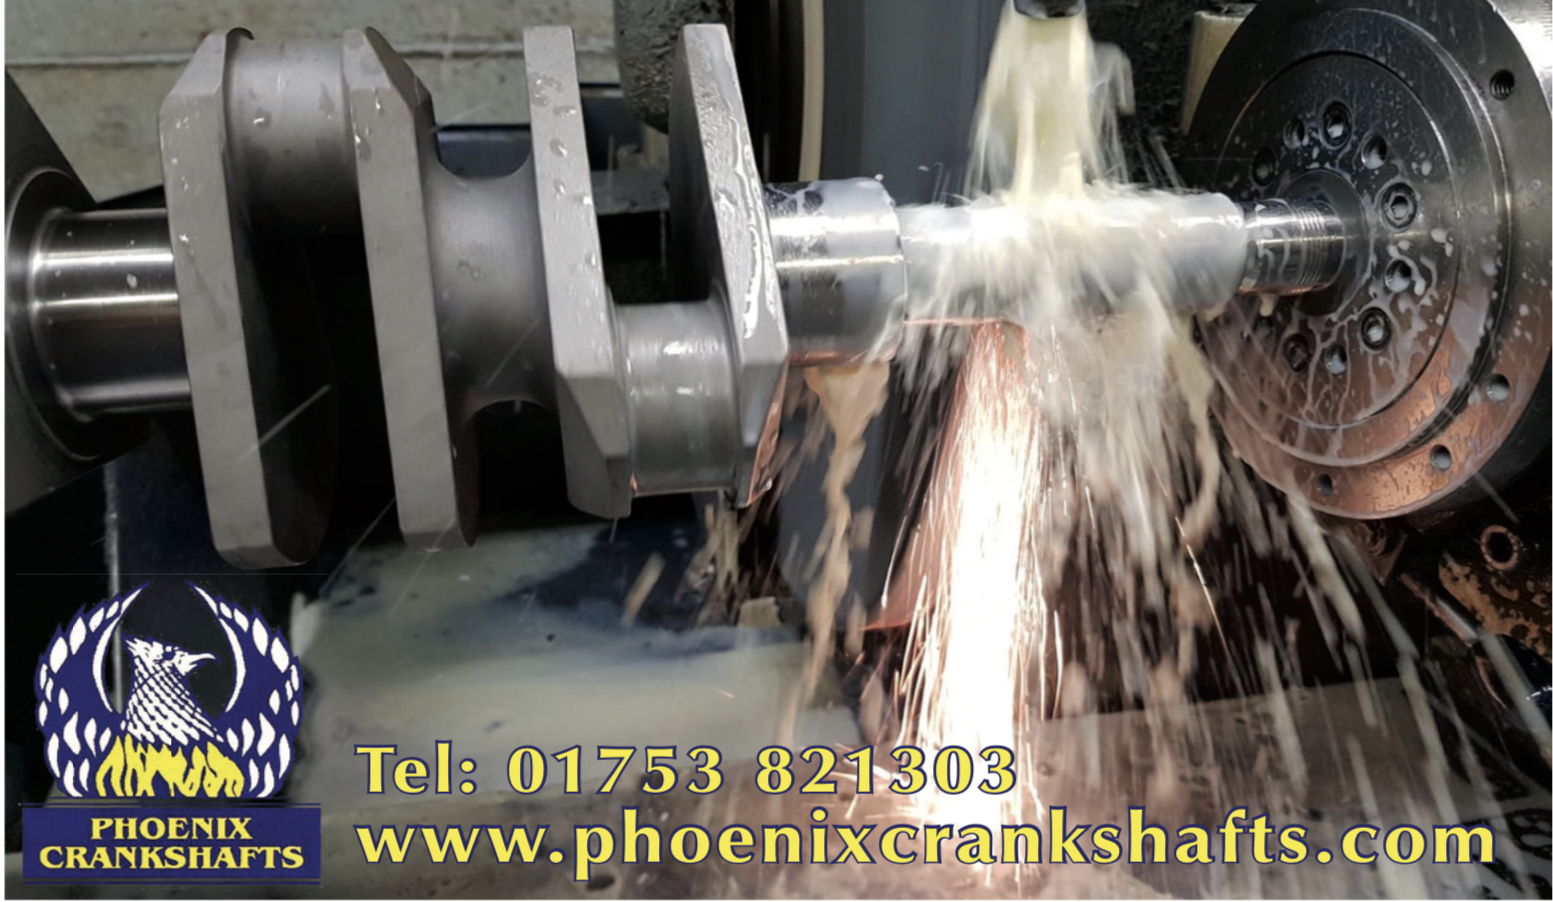 Phoenix Crankshafts - high-precision automotive crankshafts